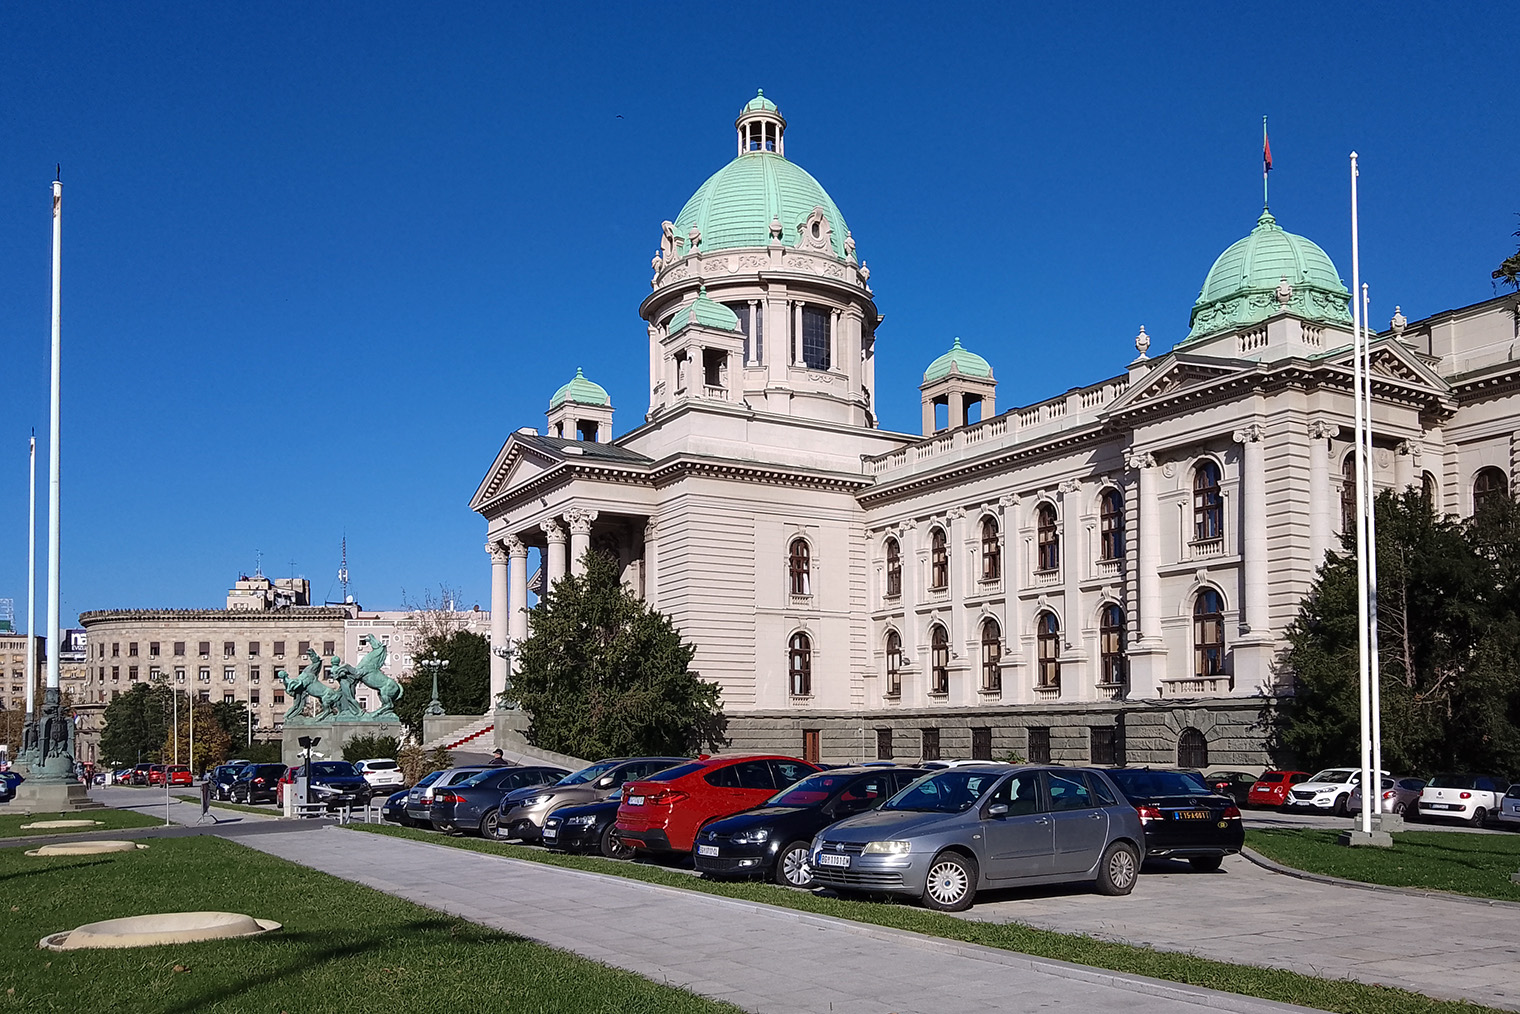 Скупщина, здание сербского парламента, тоже расположена в Стари⁠-⁠Граде